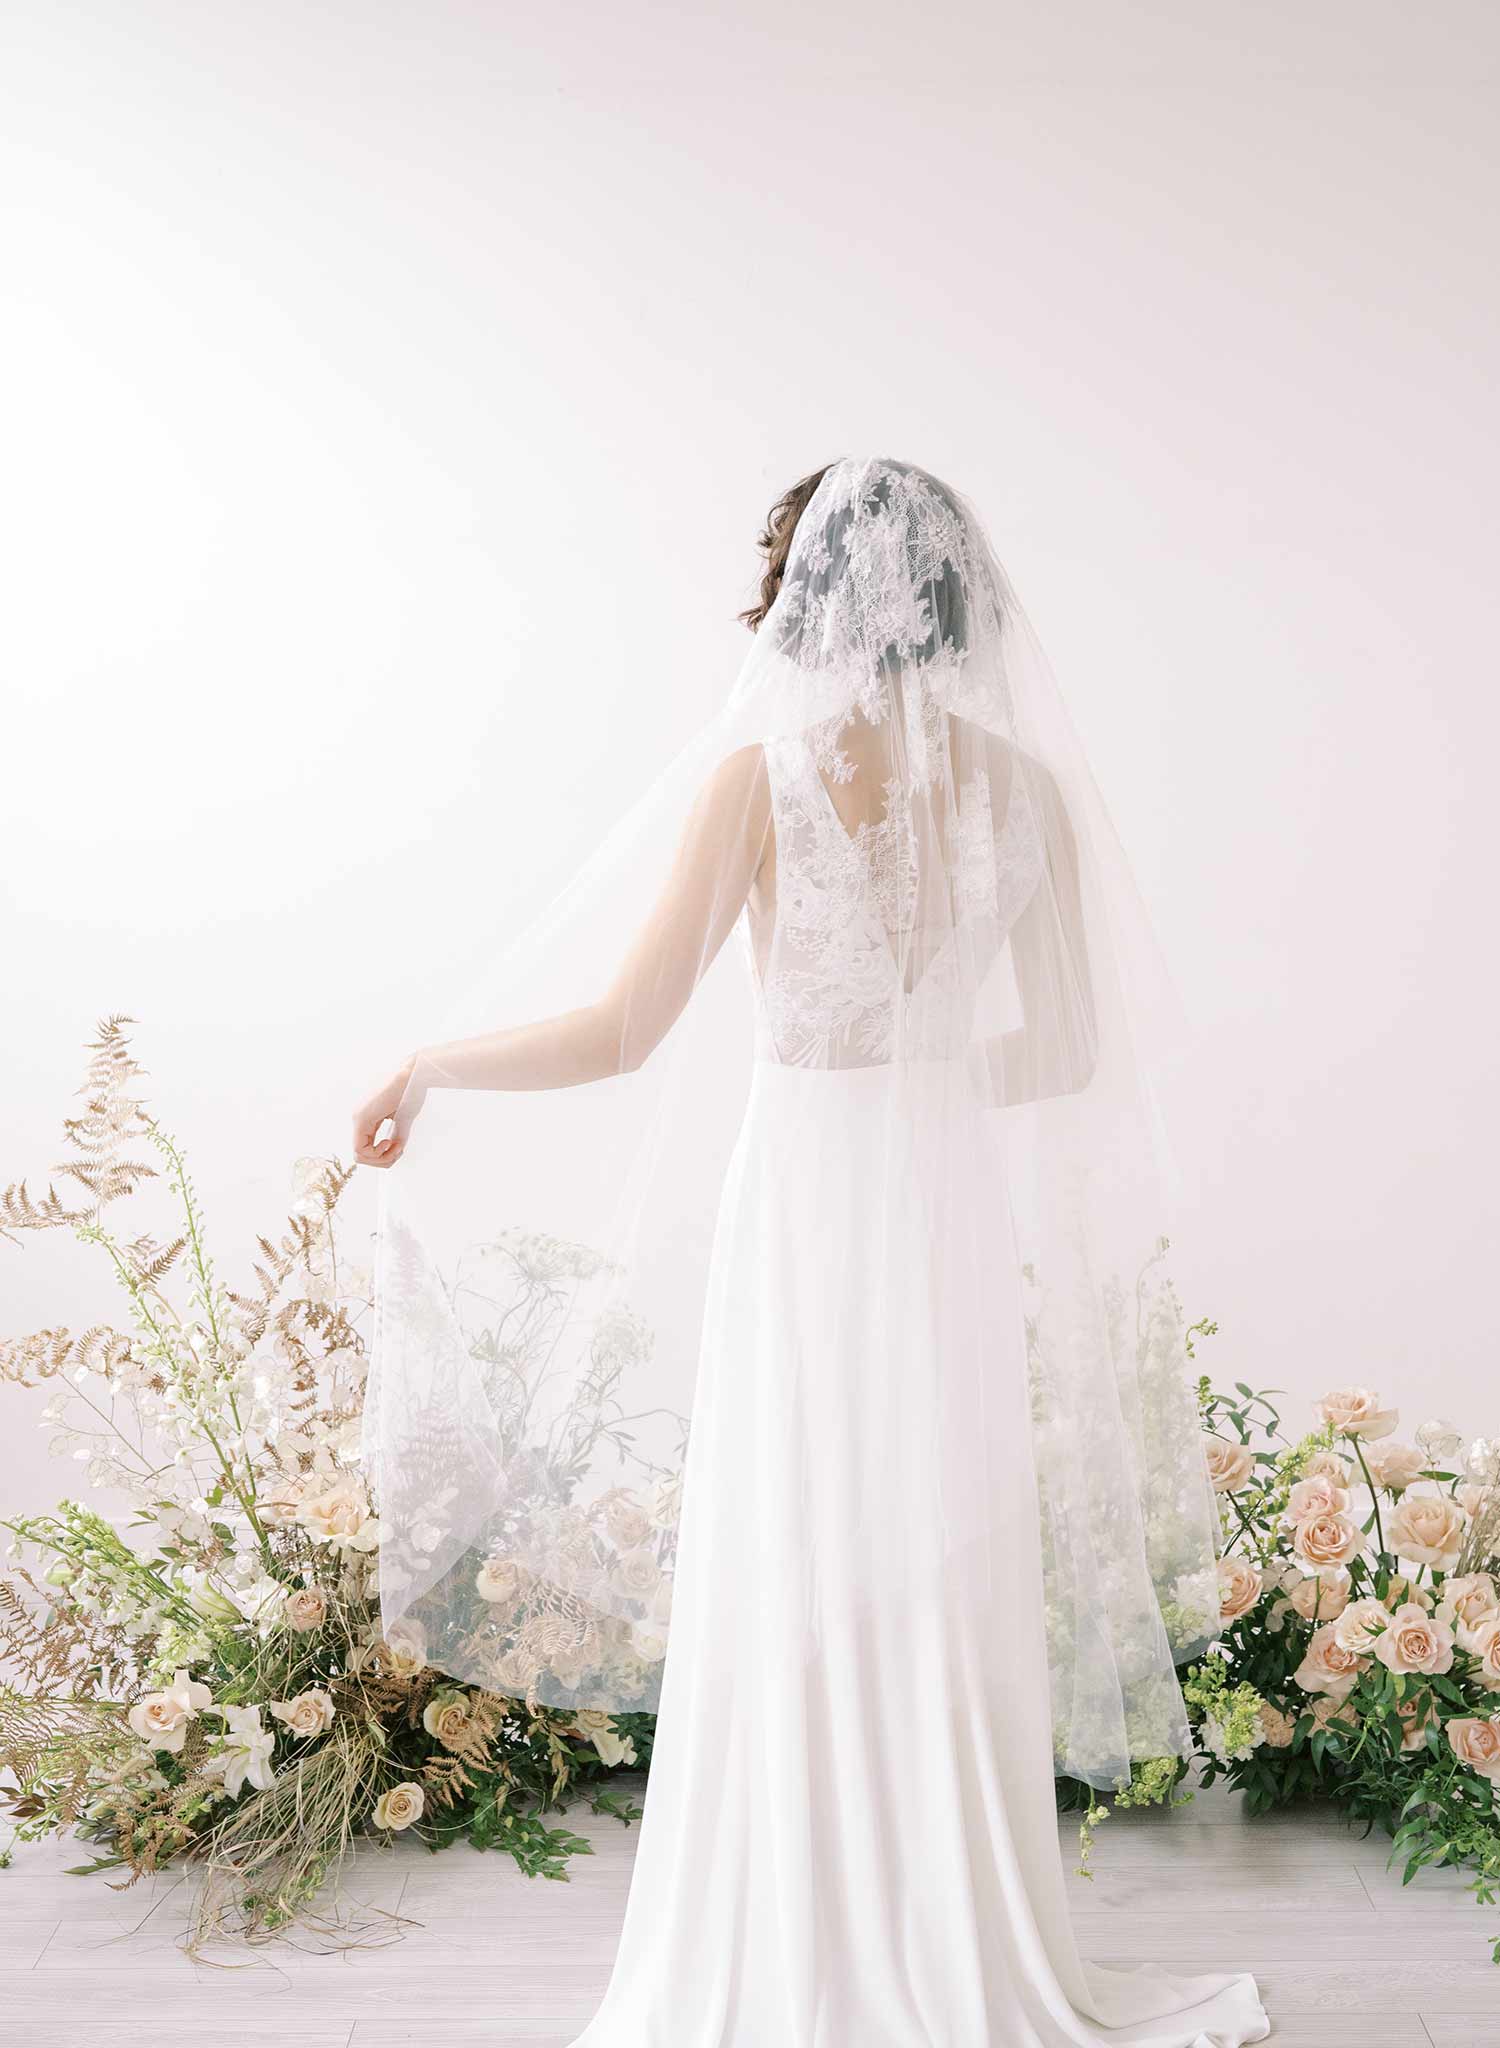 Twigs & Honey Bridal Pearl Veil - Beaded Pearl Leaves Bridal Veil - Style #2066